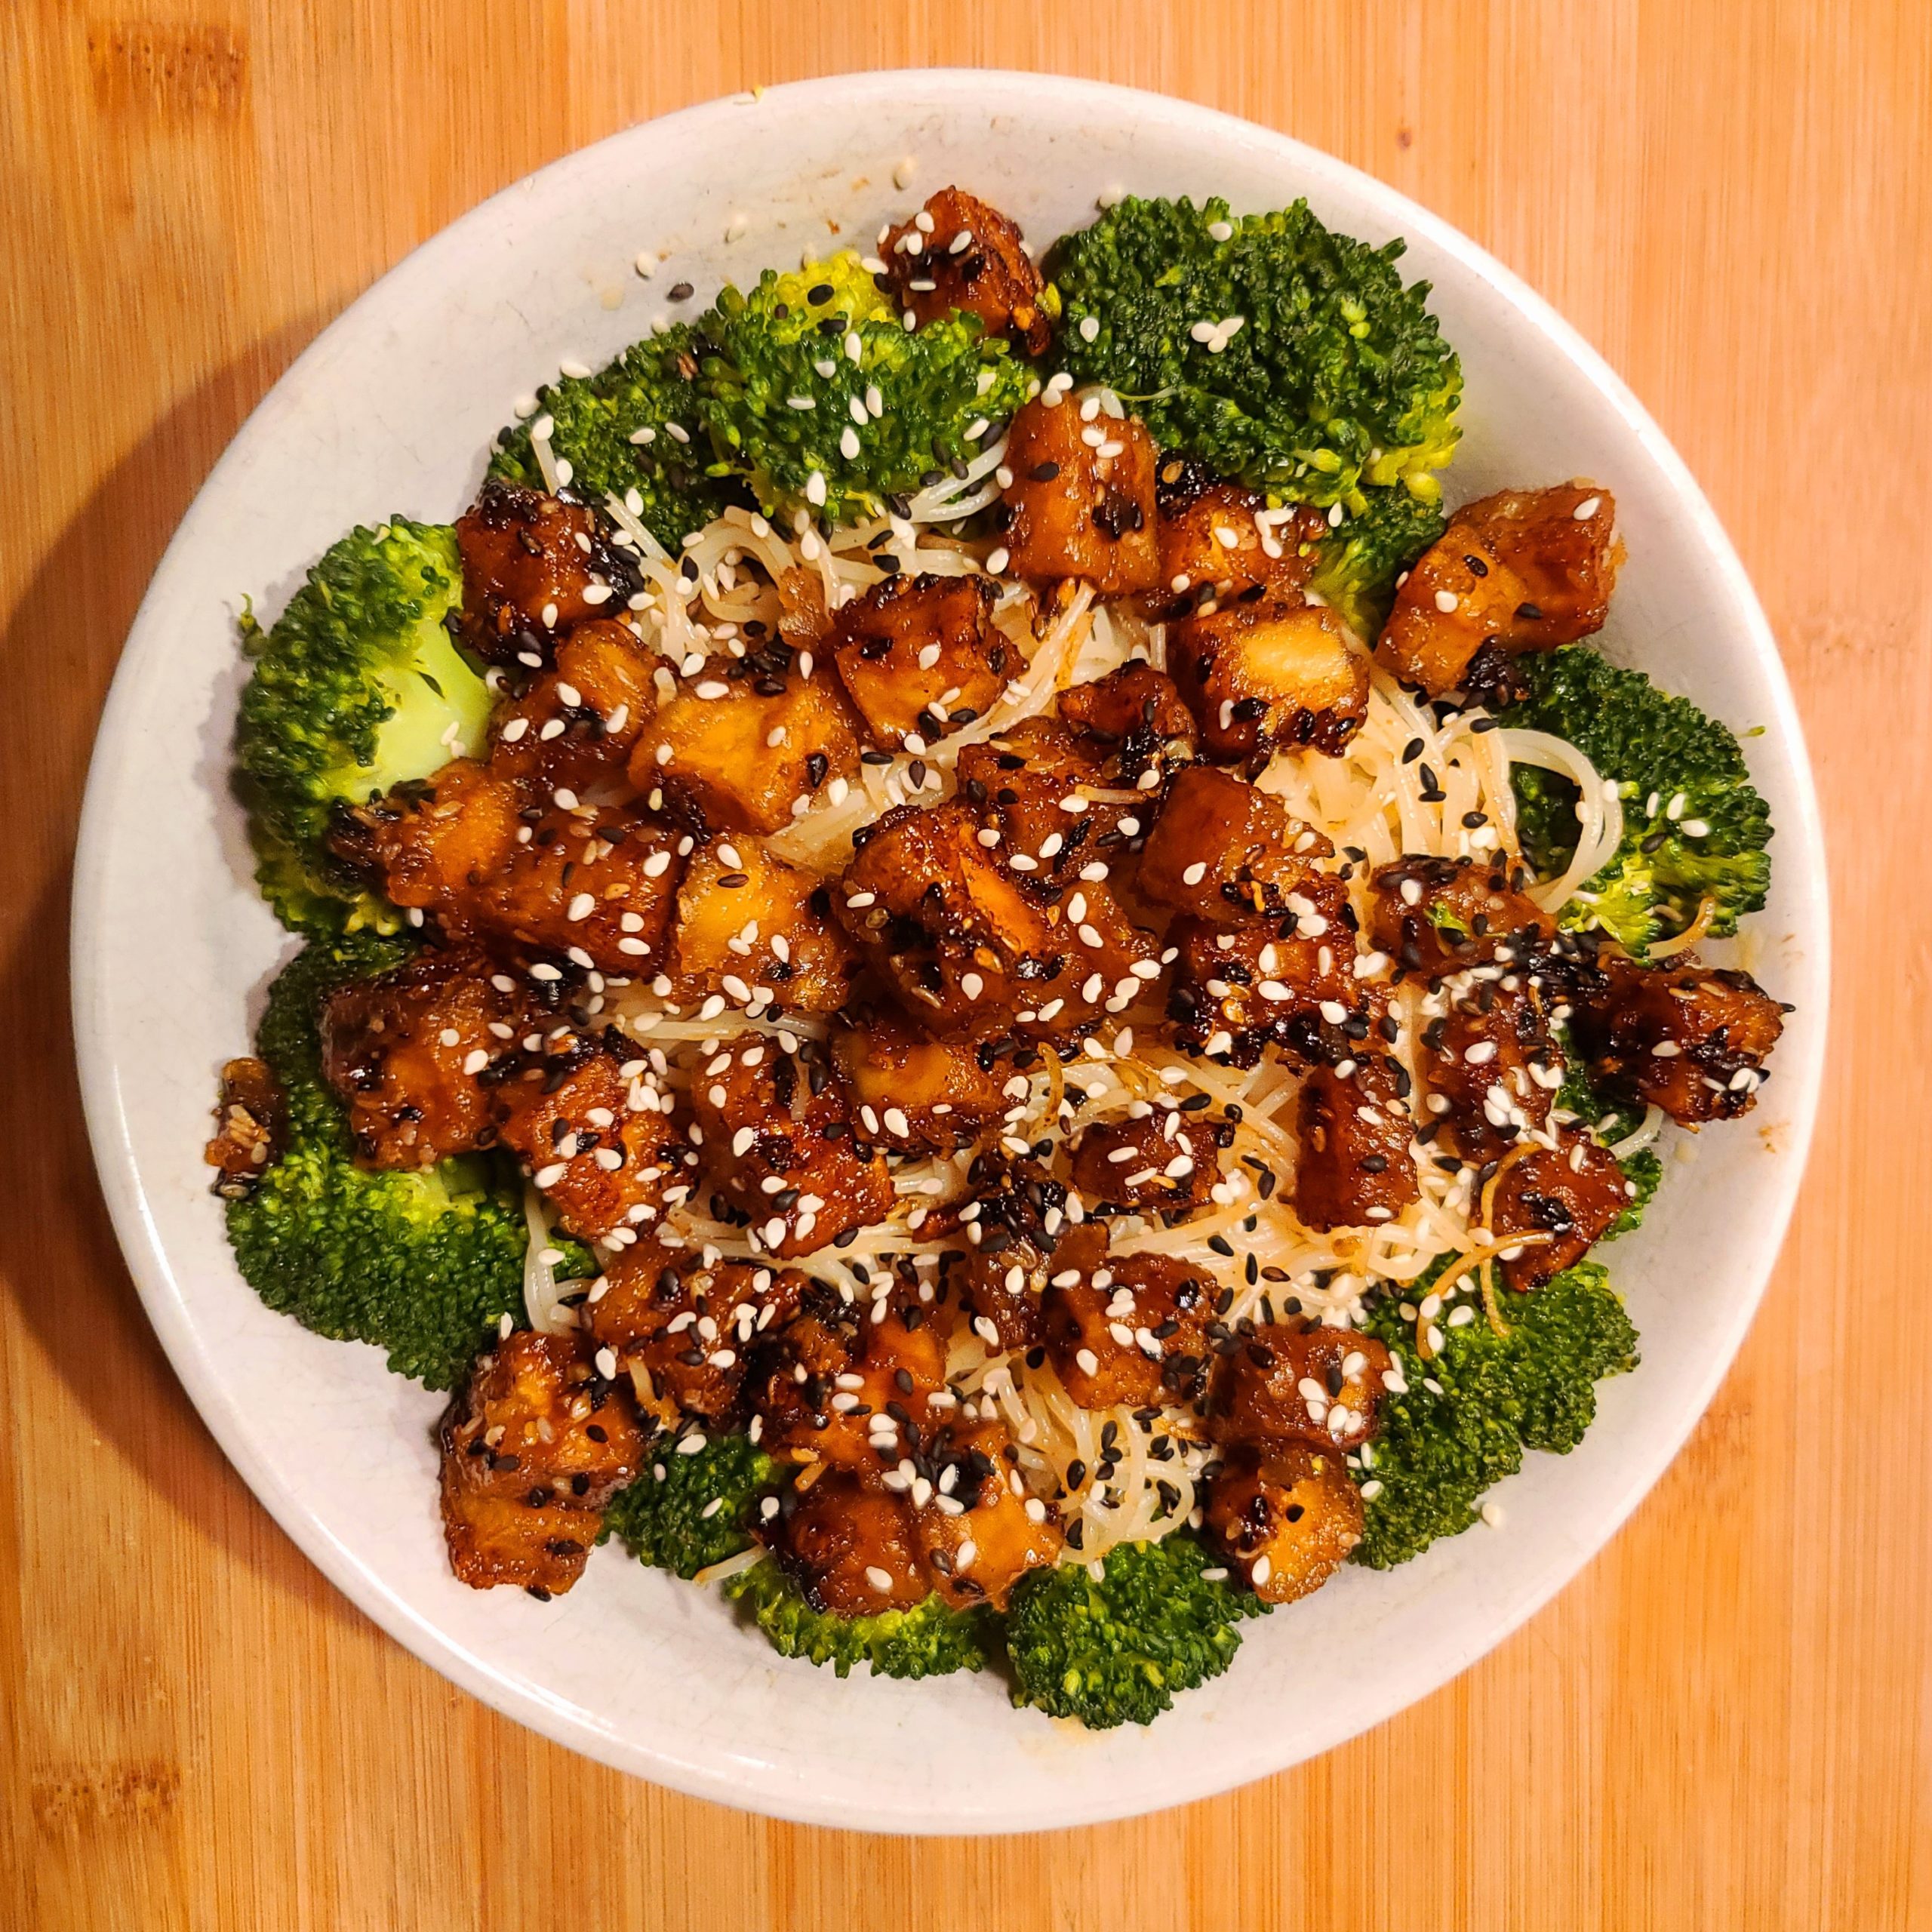 Pan-Fried Sesame Tofu With Broccoli